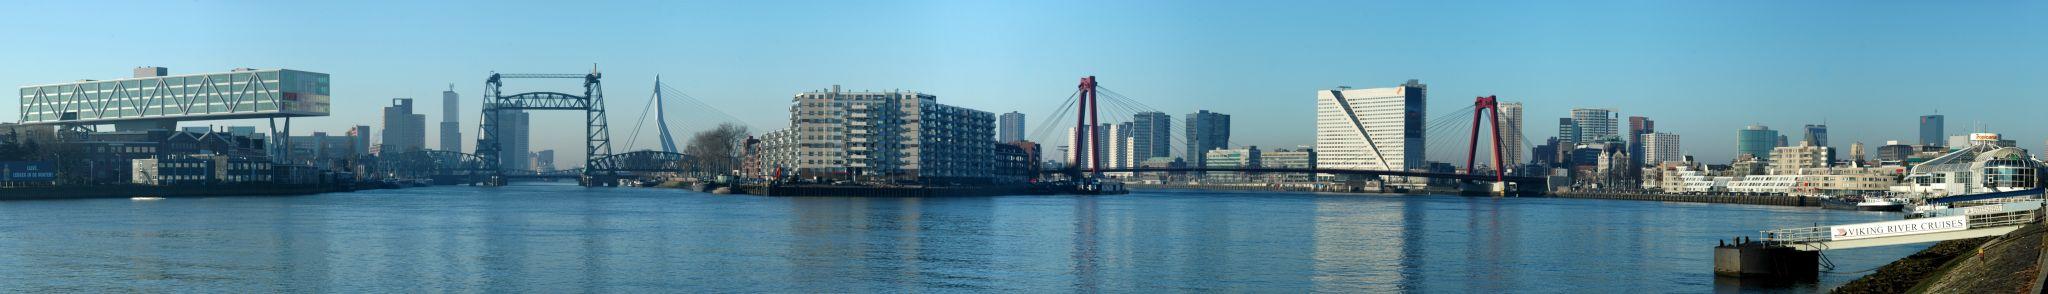 Bridges of Rotterdam